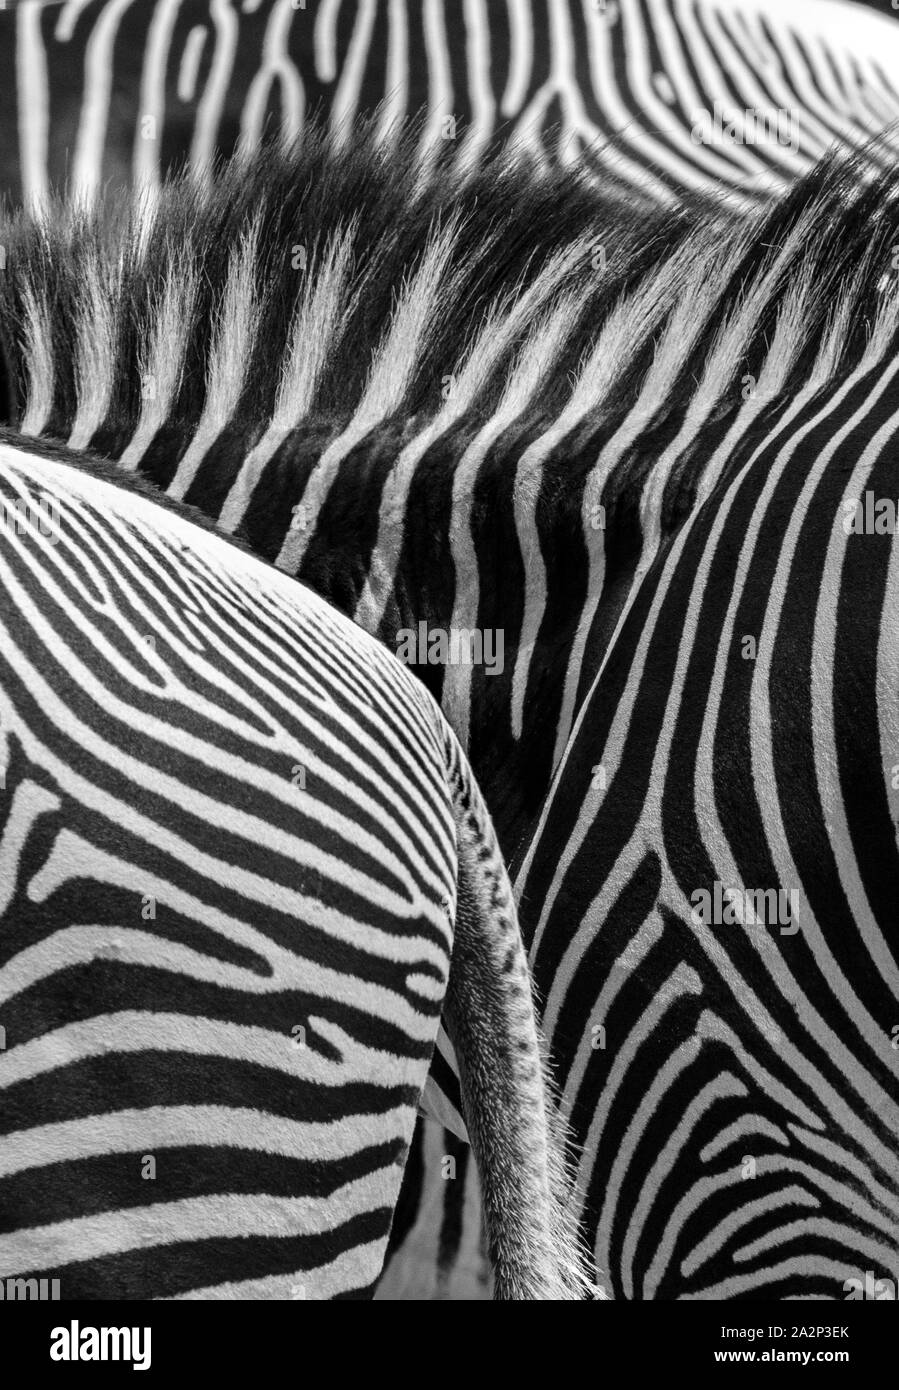 Abstract Pattern dans Zebra Stripes, zèbres de Grévy, Samburu, Kenya Banque D'Images